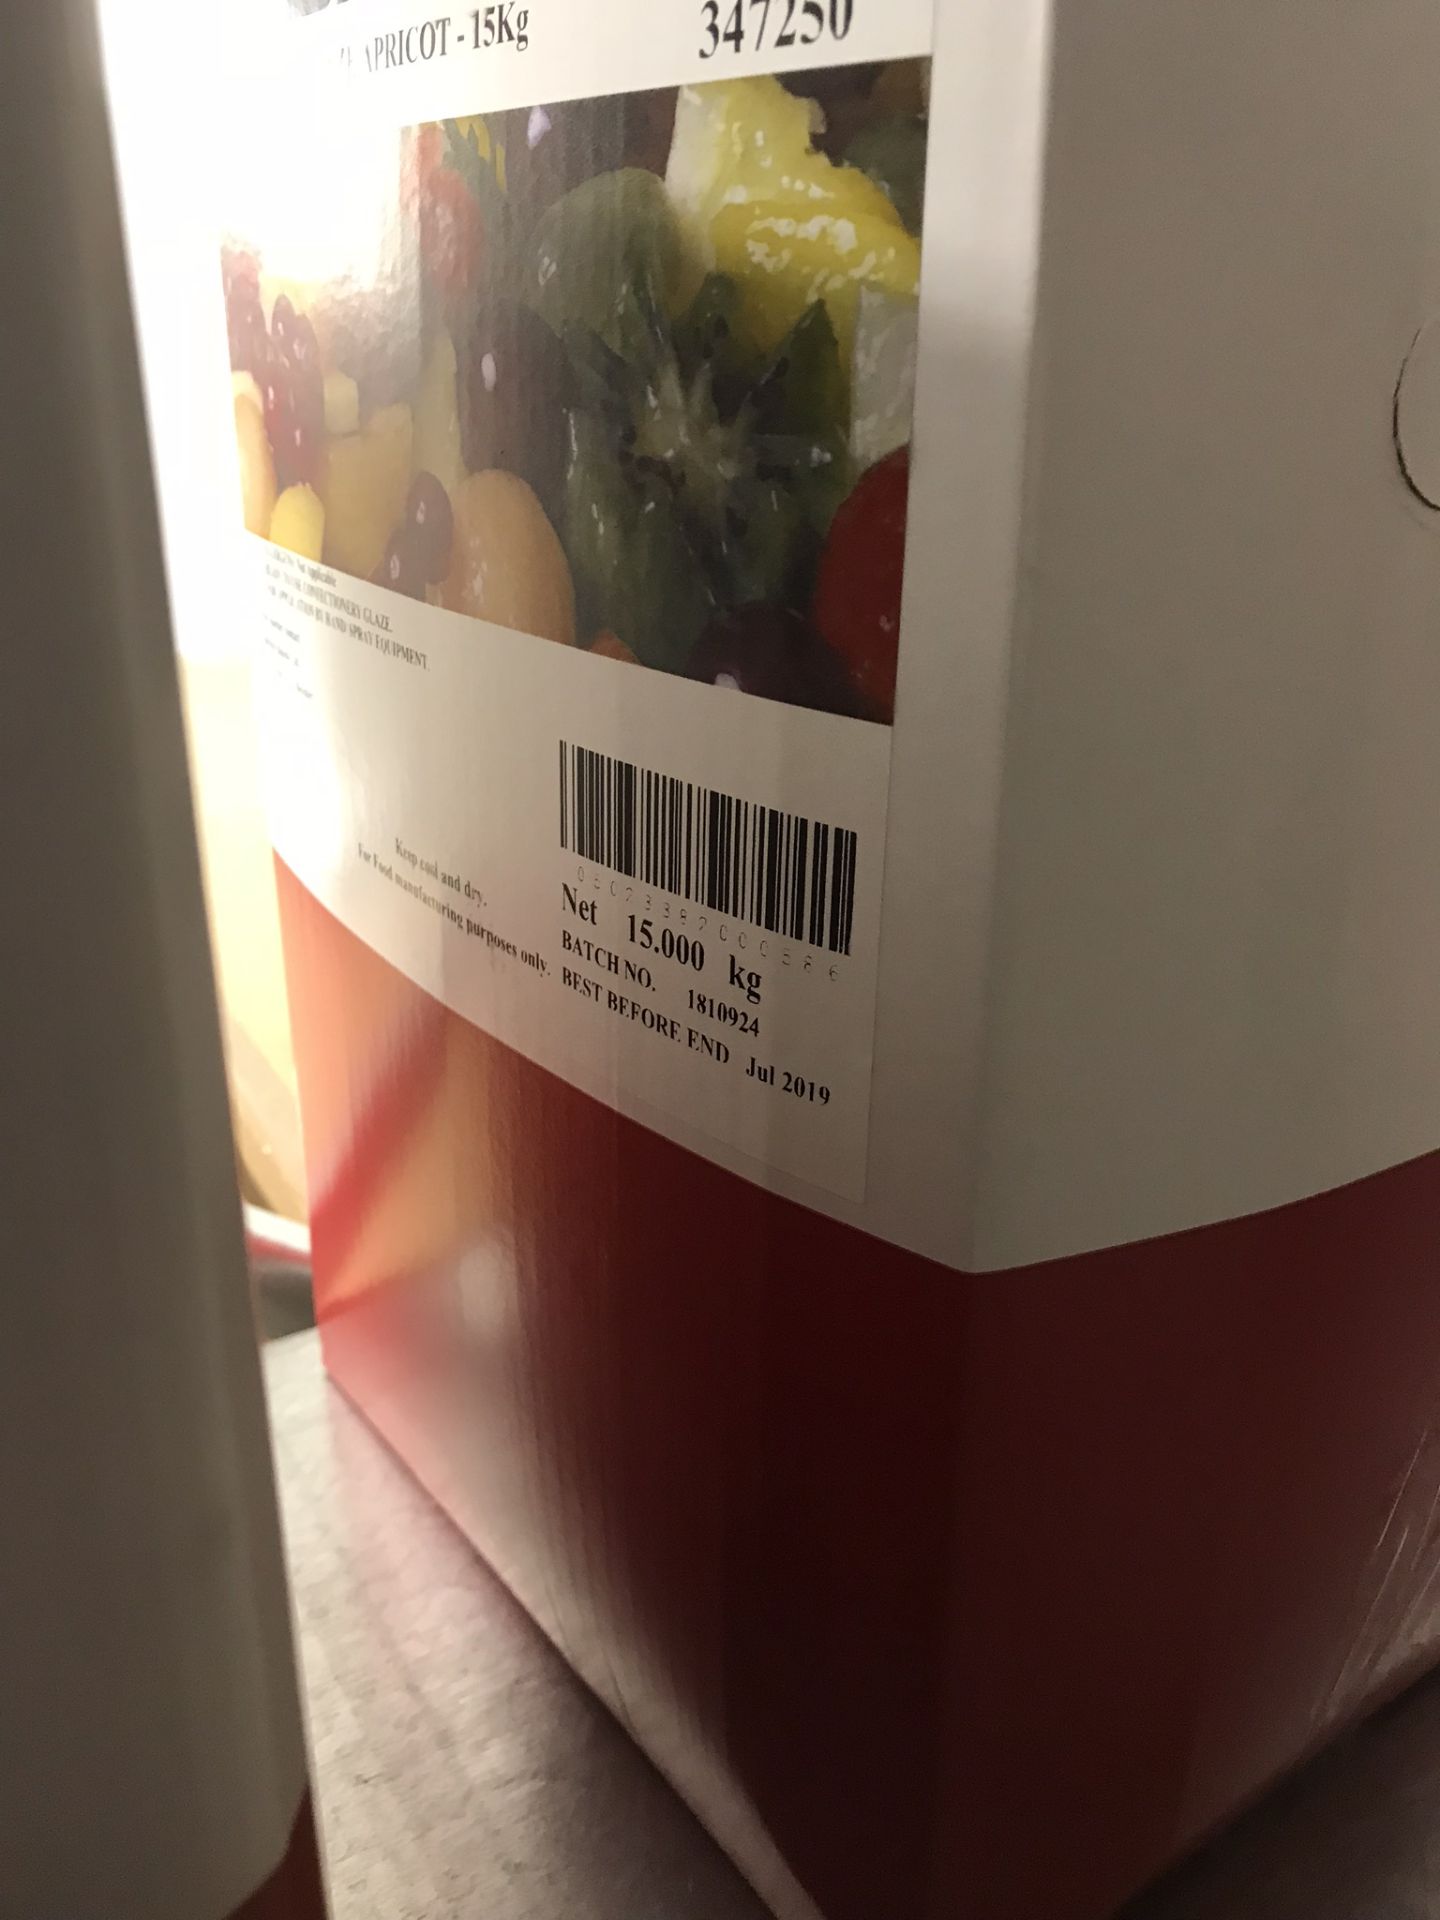 3 x Bakels Inst Superglaze Apricot - 15kg - Product Code: 347250 - 07/2019 - Image 5 of 5